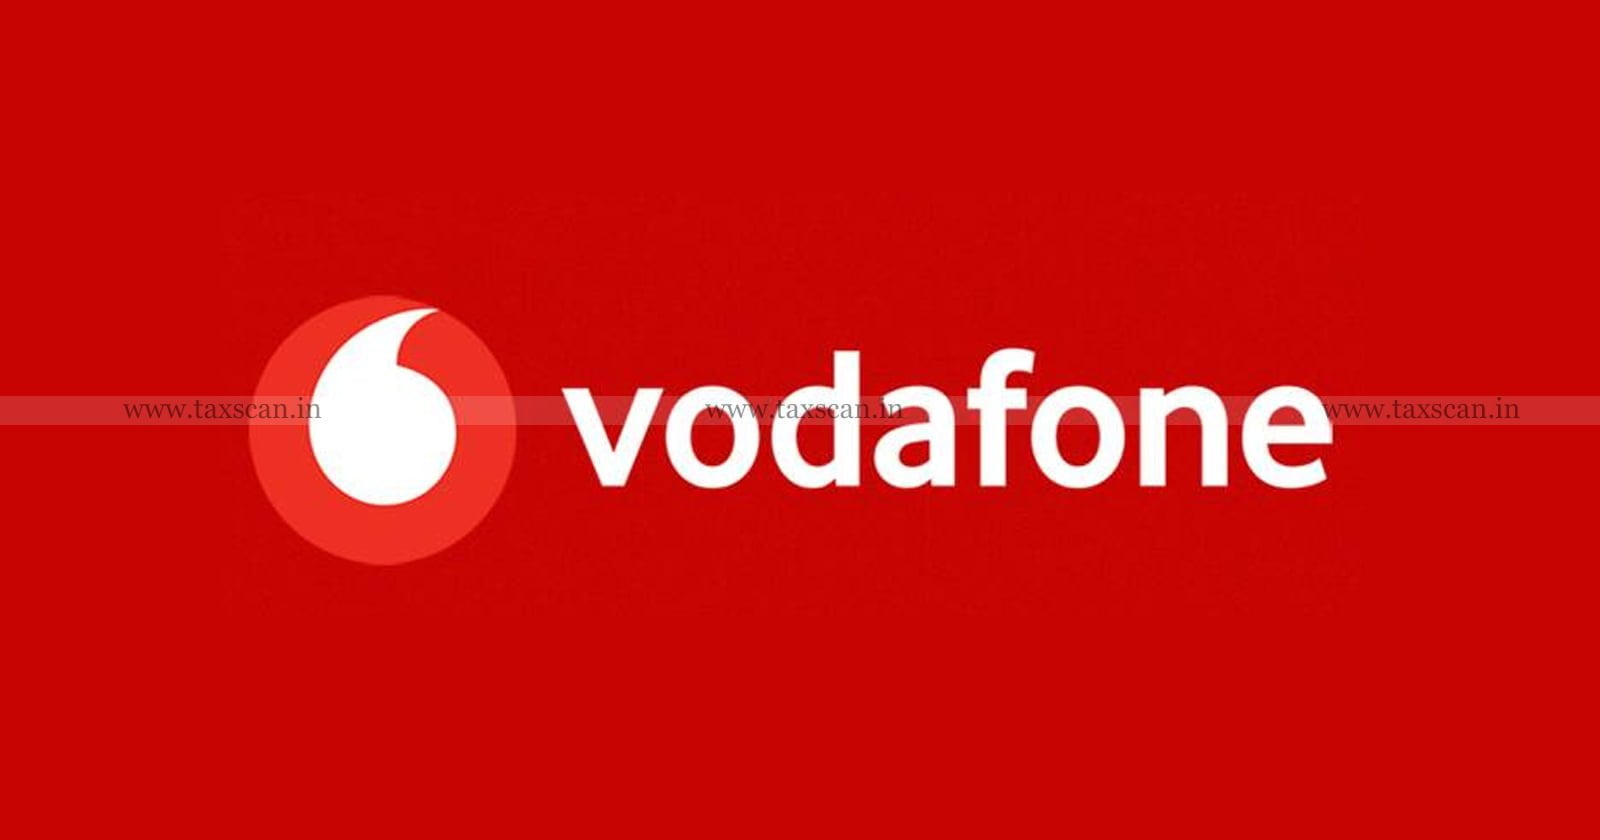 Relief to Vodafone - Vodafone - Relief - CENVAT credit - Unutilized CENVAT credit - CESTAT rules Unutilized CENVAT credit - taxscan